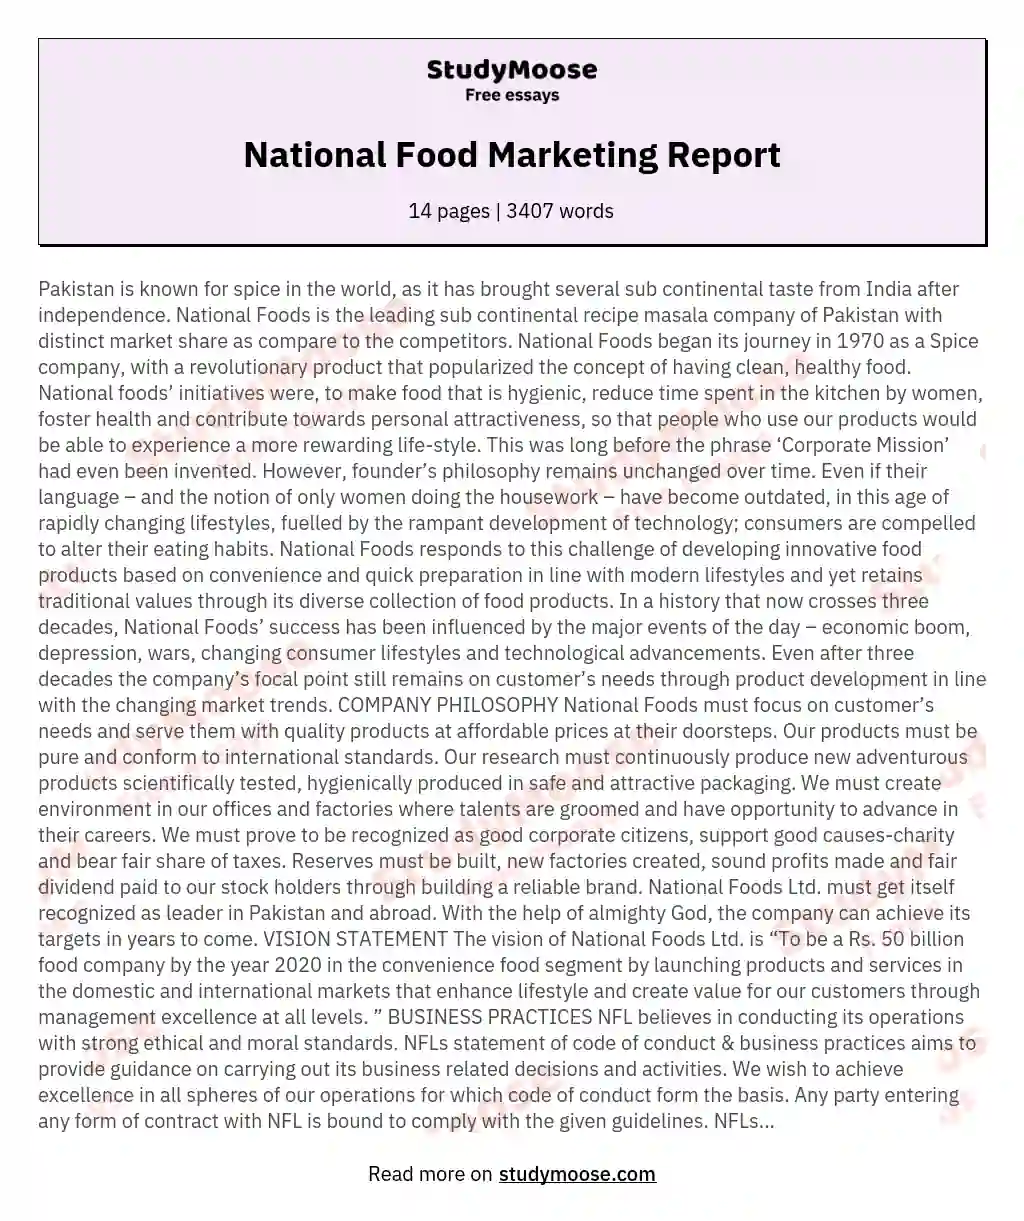 National Food Marketing Report essay